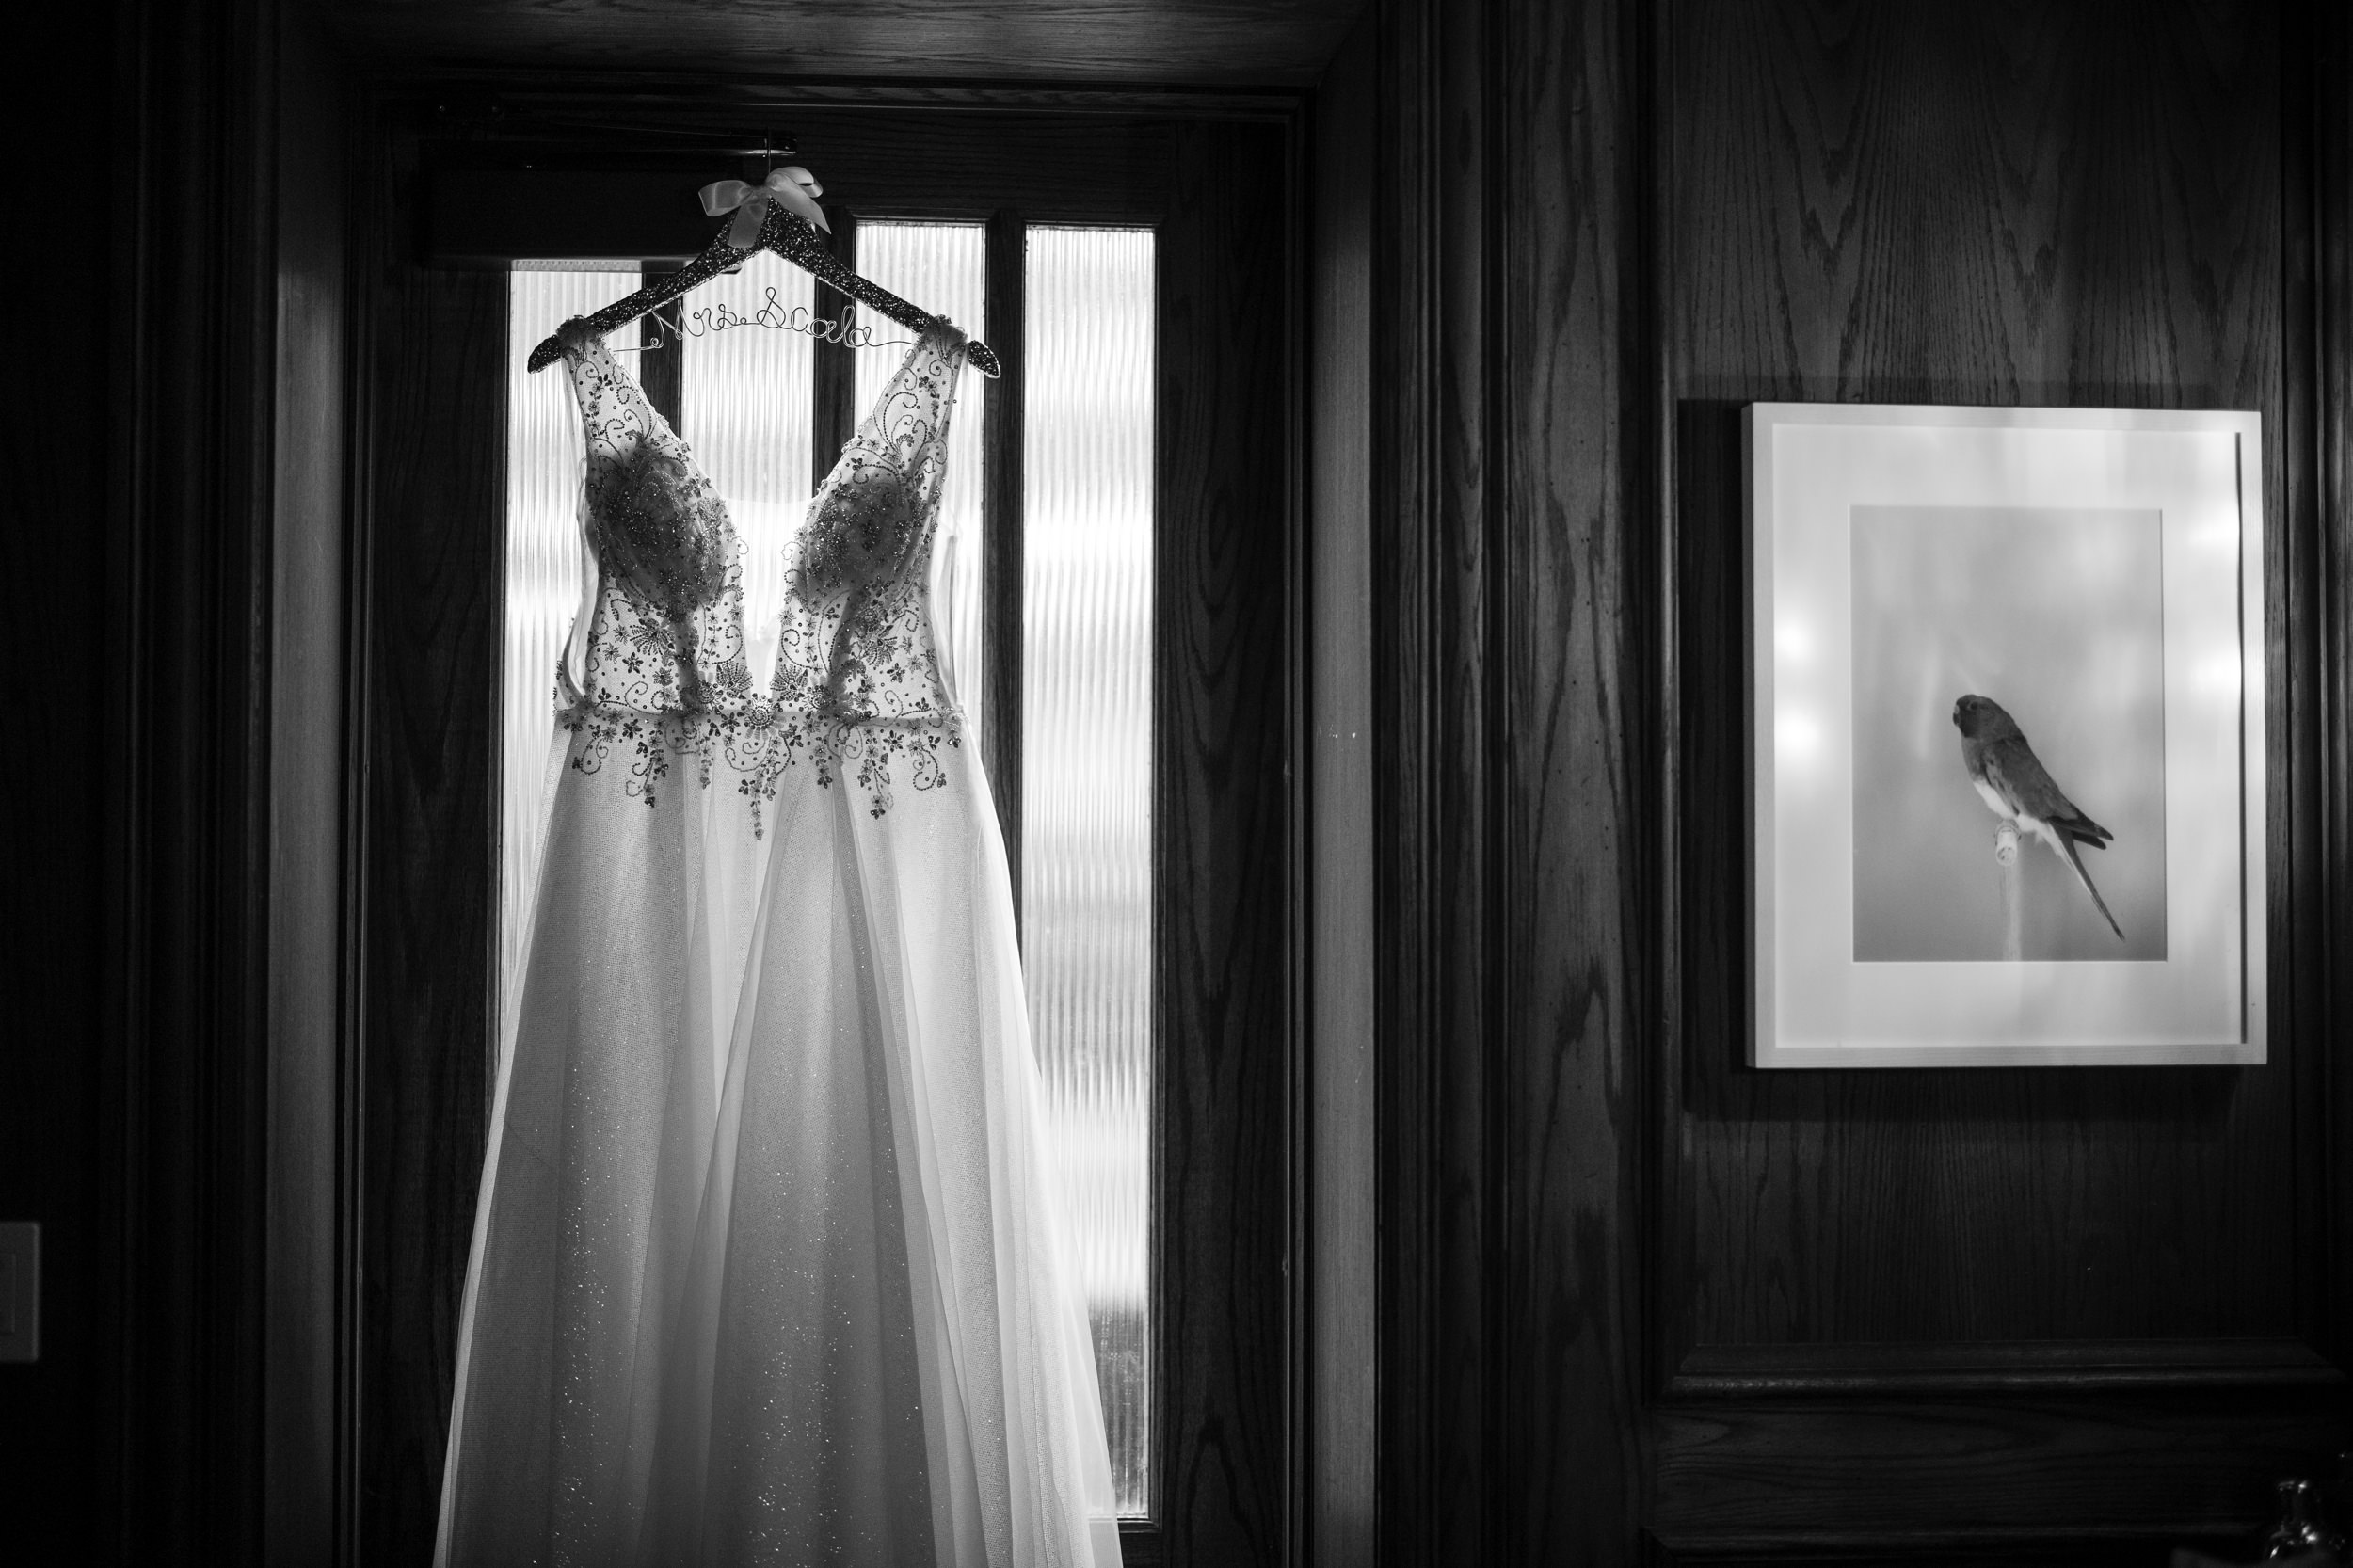 Wedding dress in the window at a Beekman Hotel wedding in NYC